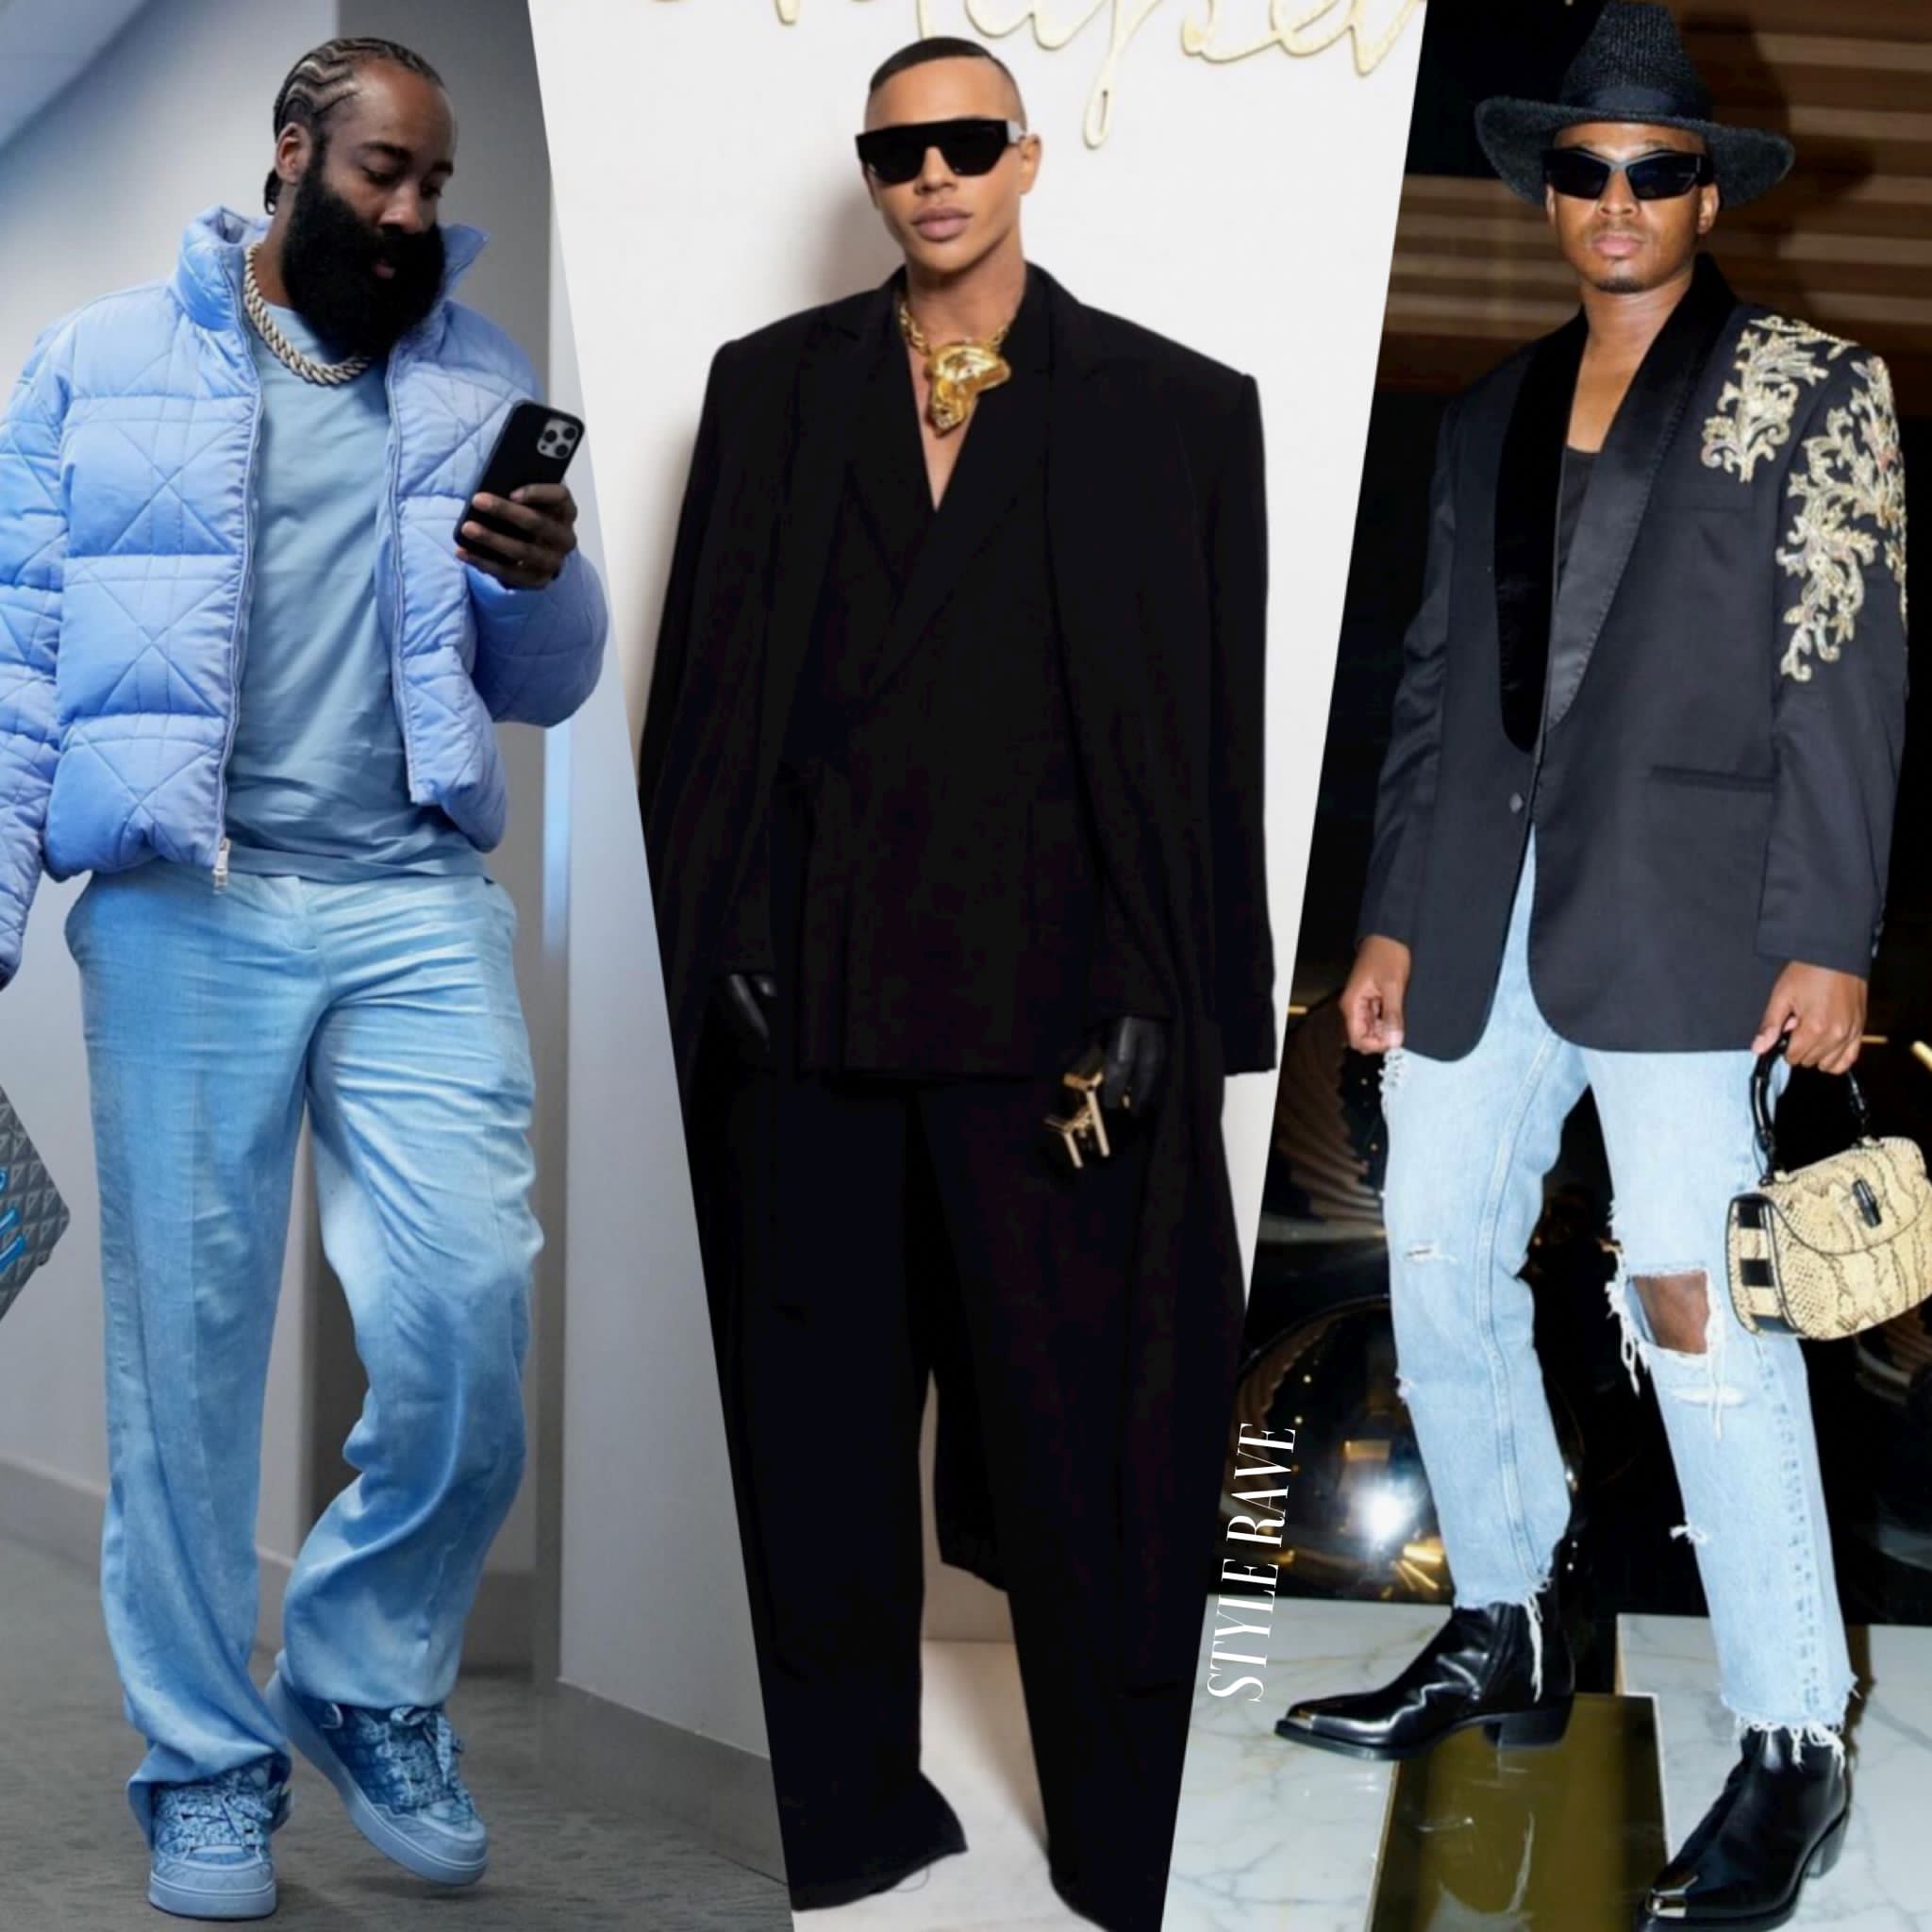 Best Dressed Nigerian Men 2019: The 10 Most Stylish Male Celebrities